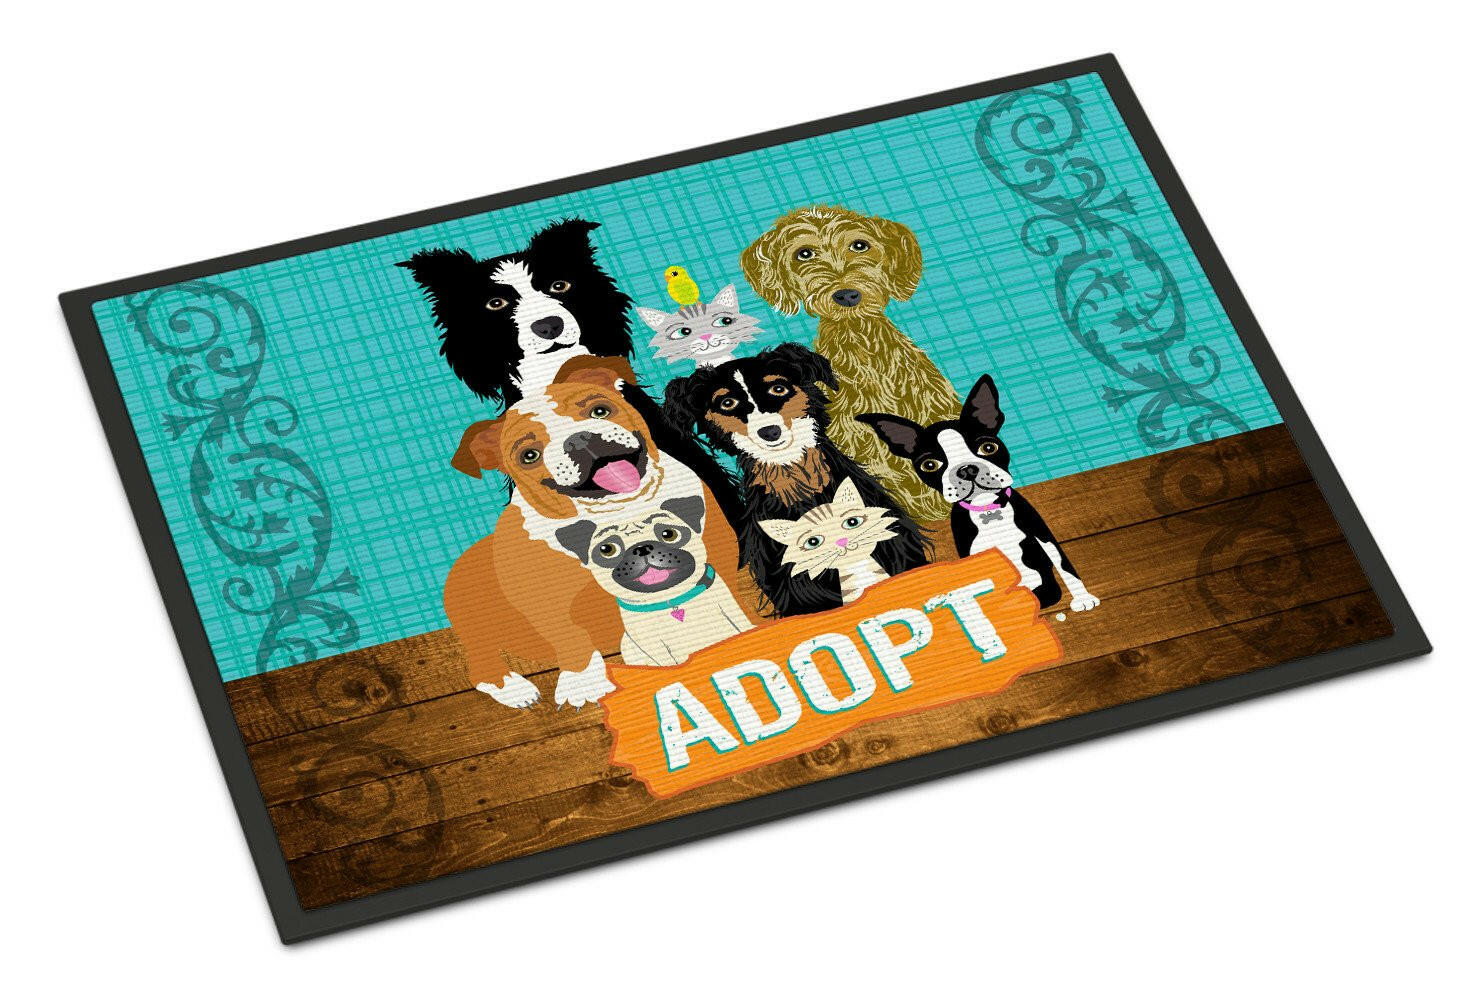 Adopt Pets Adoption Indoor or Outdoor Mat 24x36 VHA3007JMAT - the-store.com